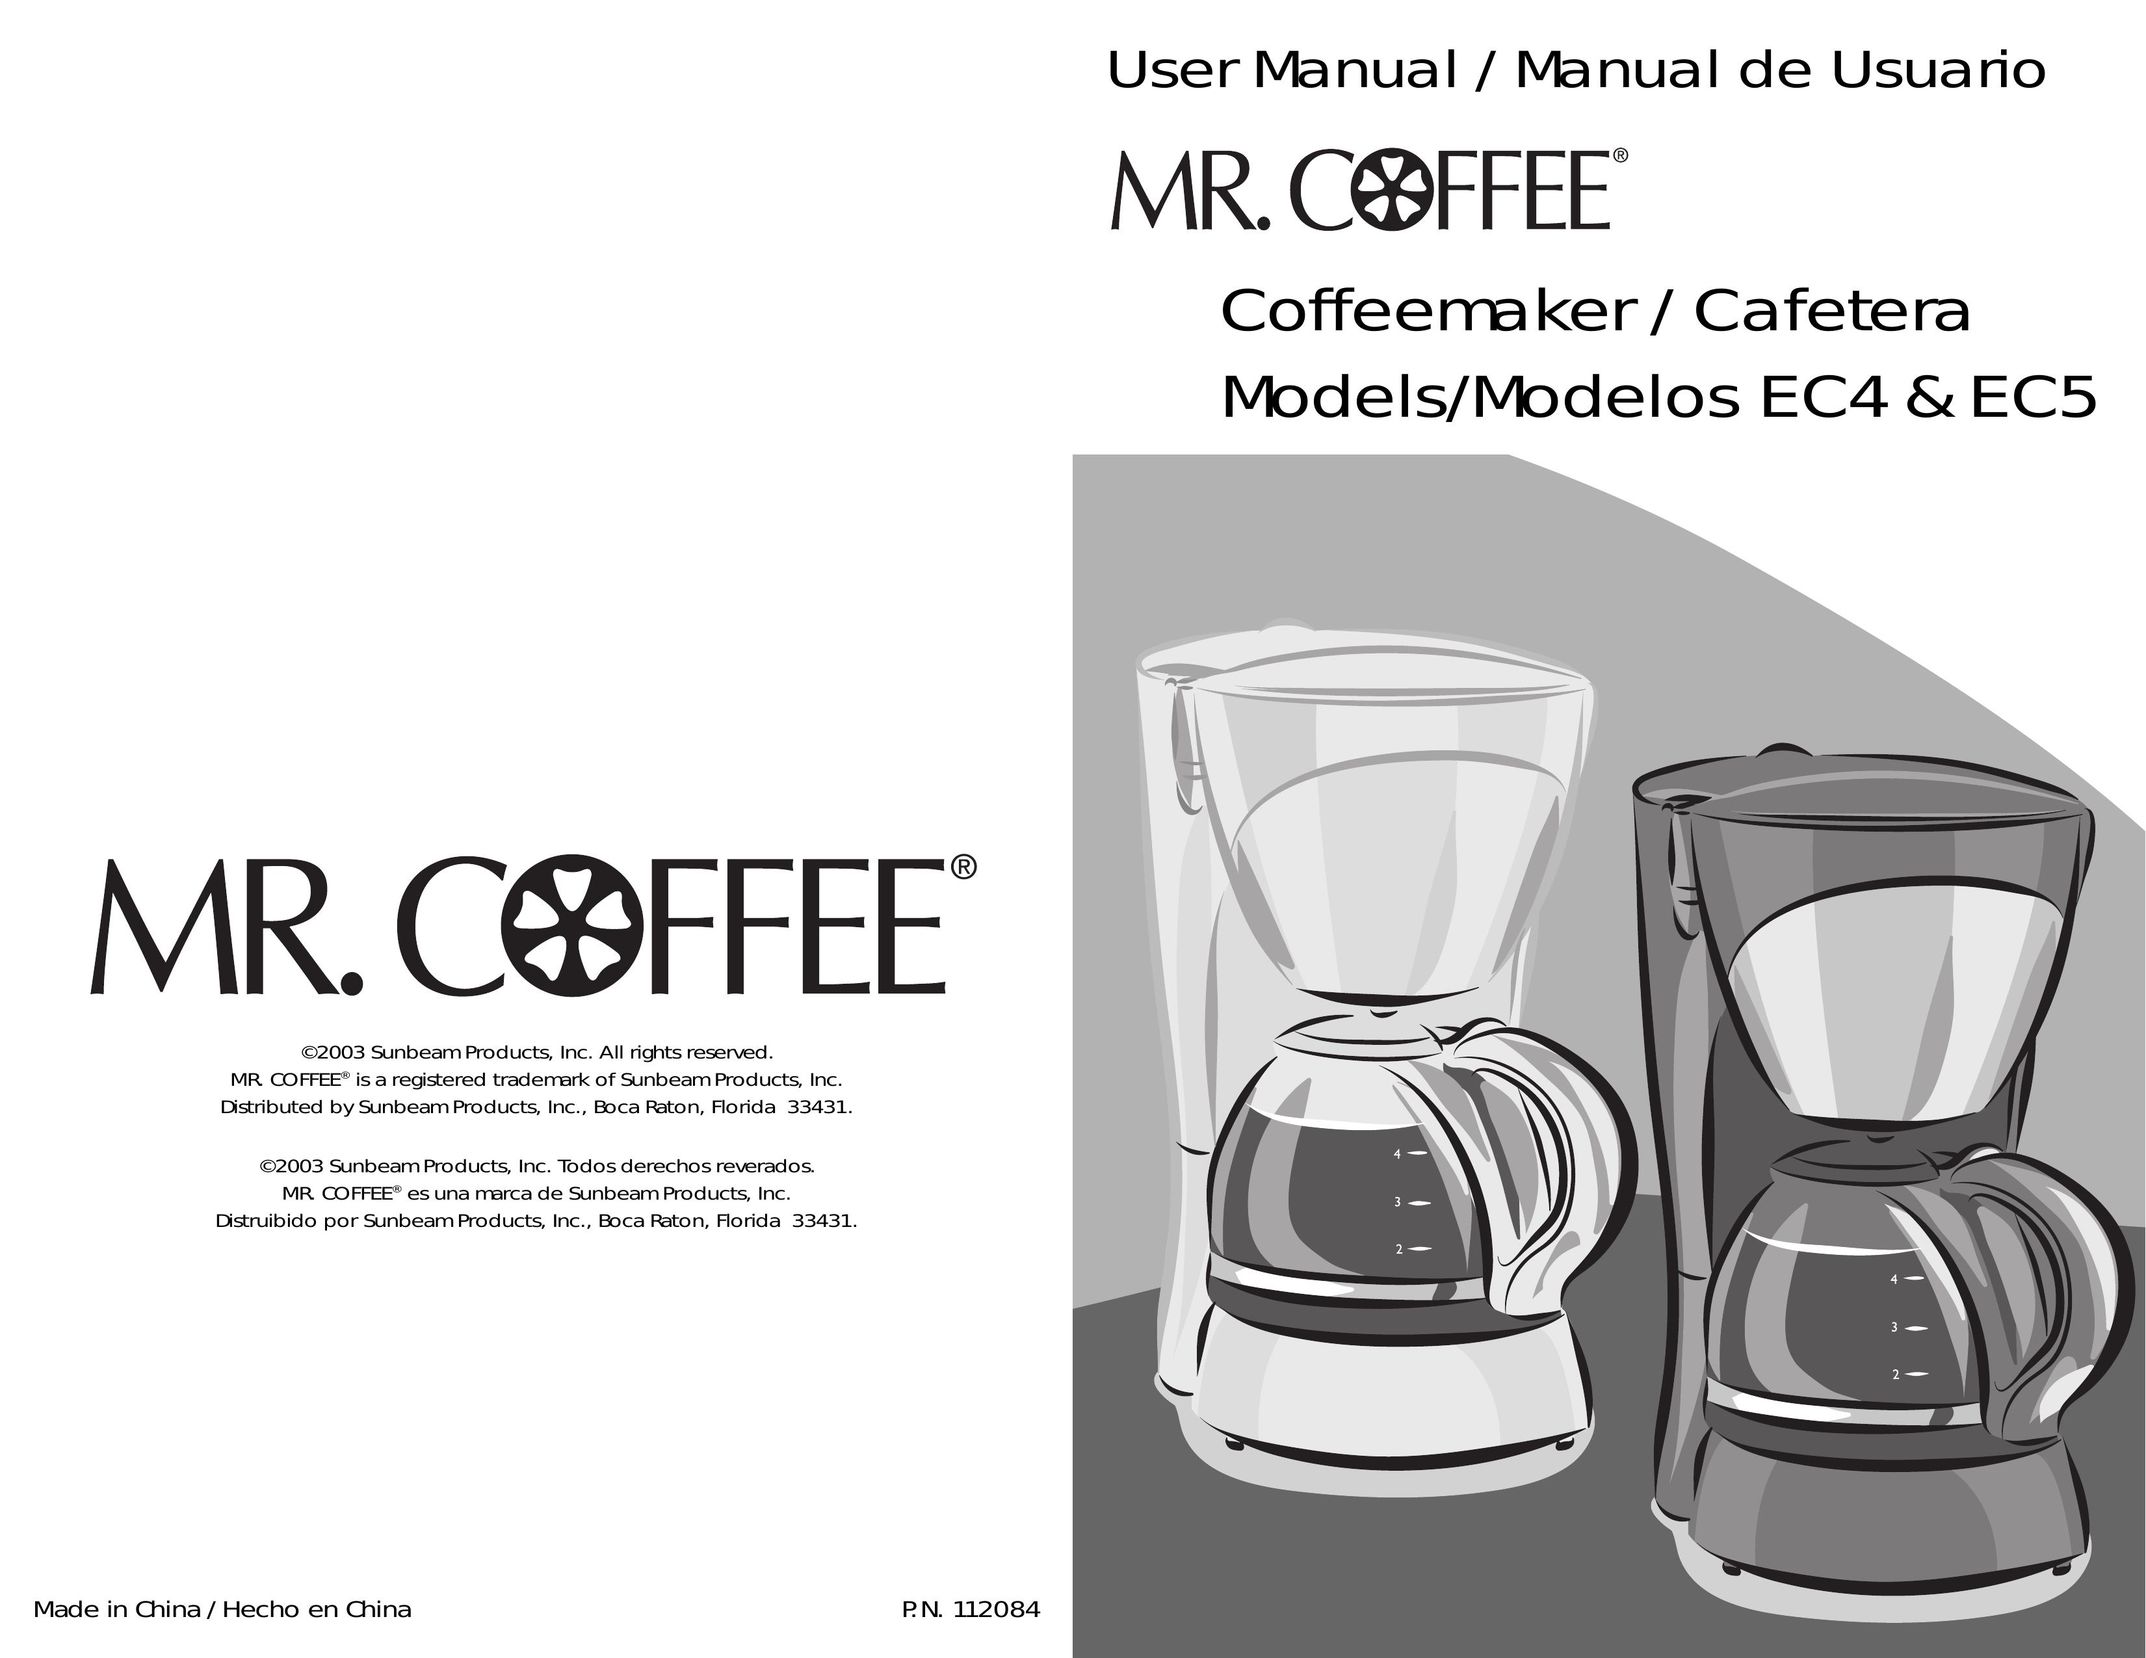 Mr. Coffee EC4 Coffeemaker User Manual